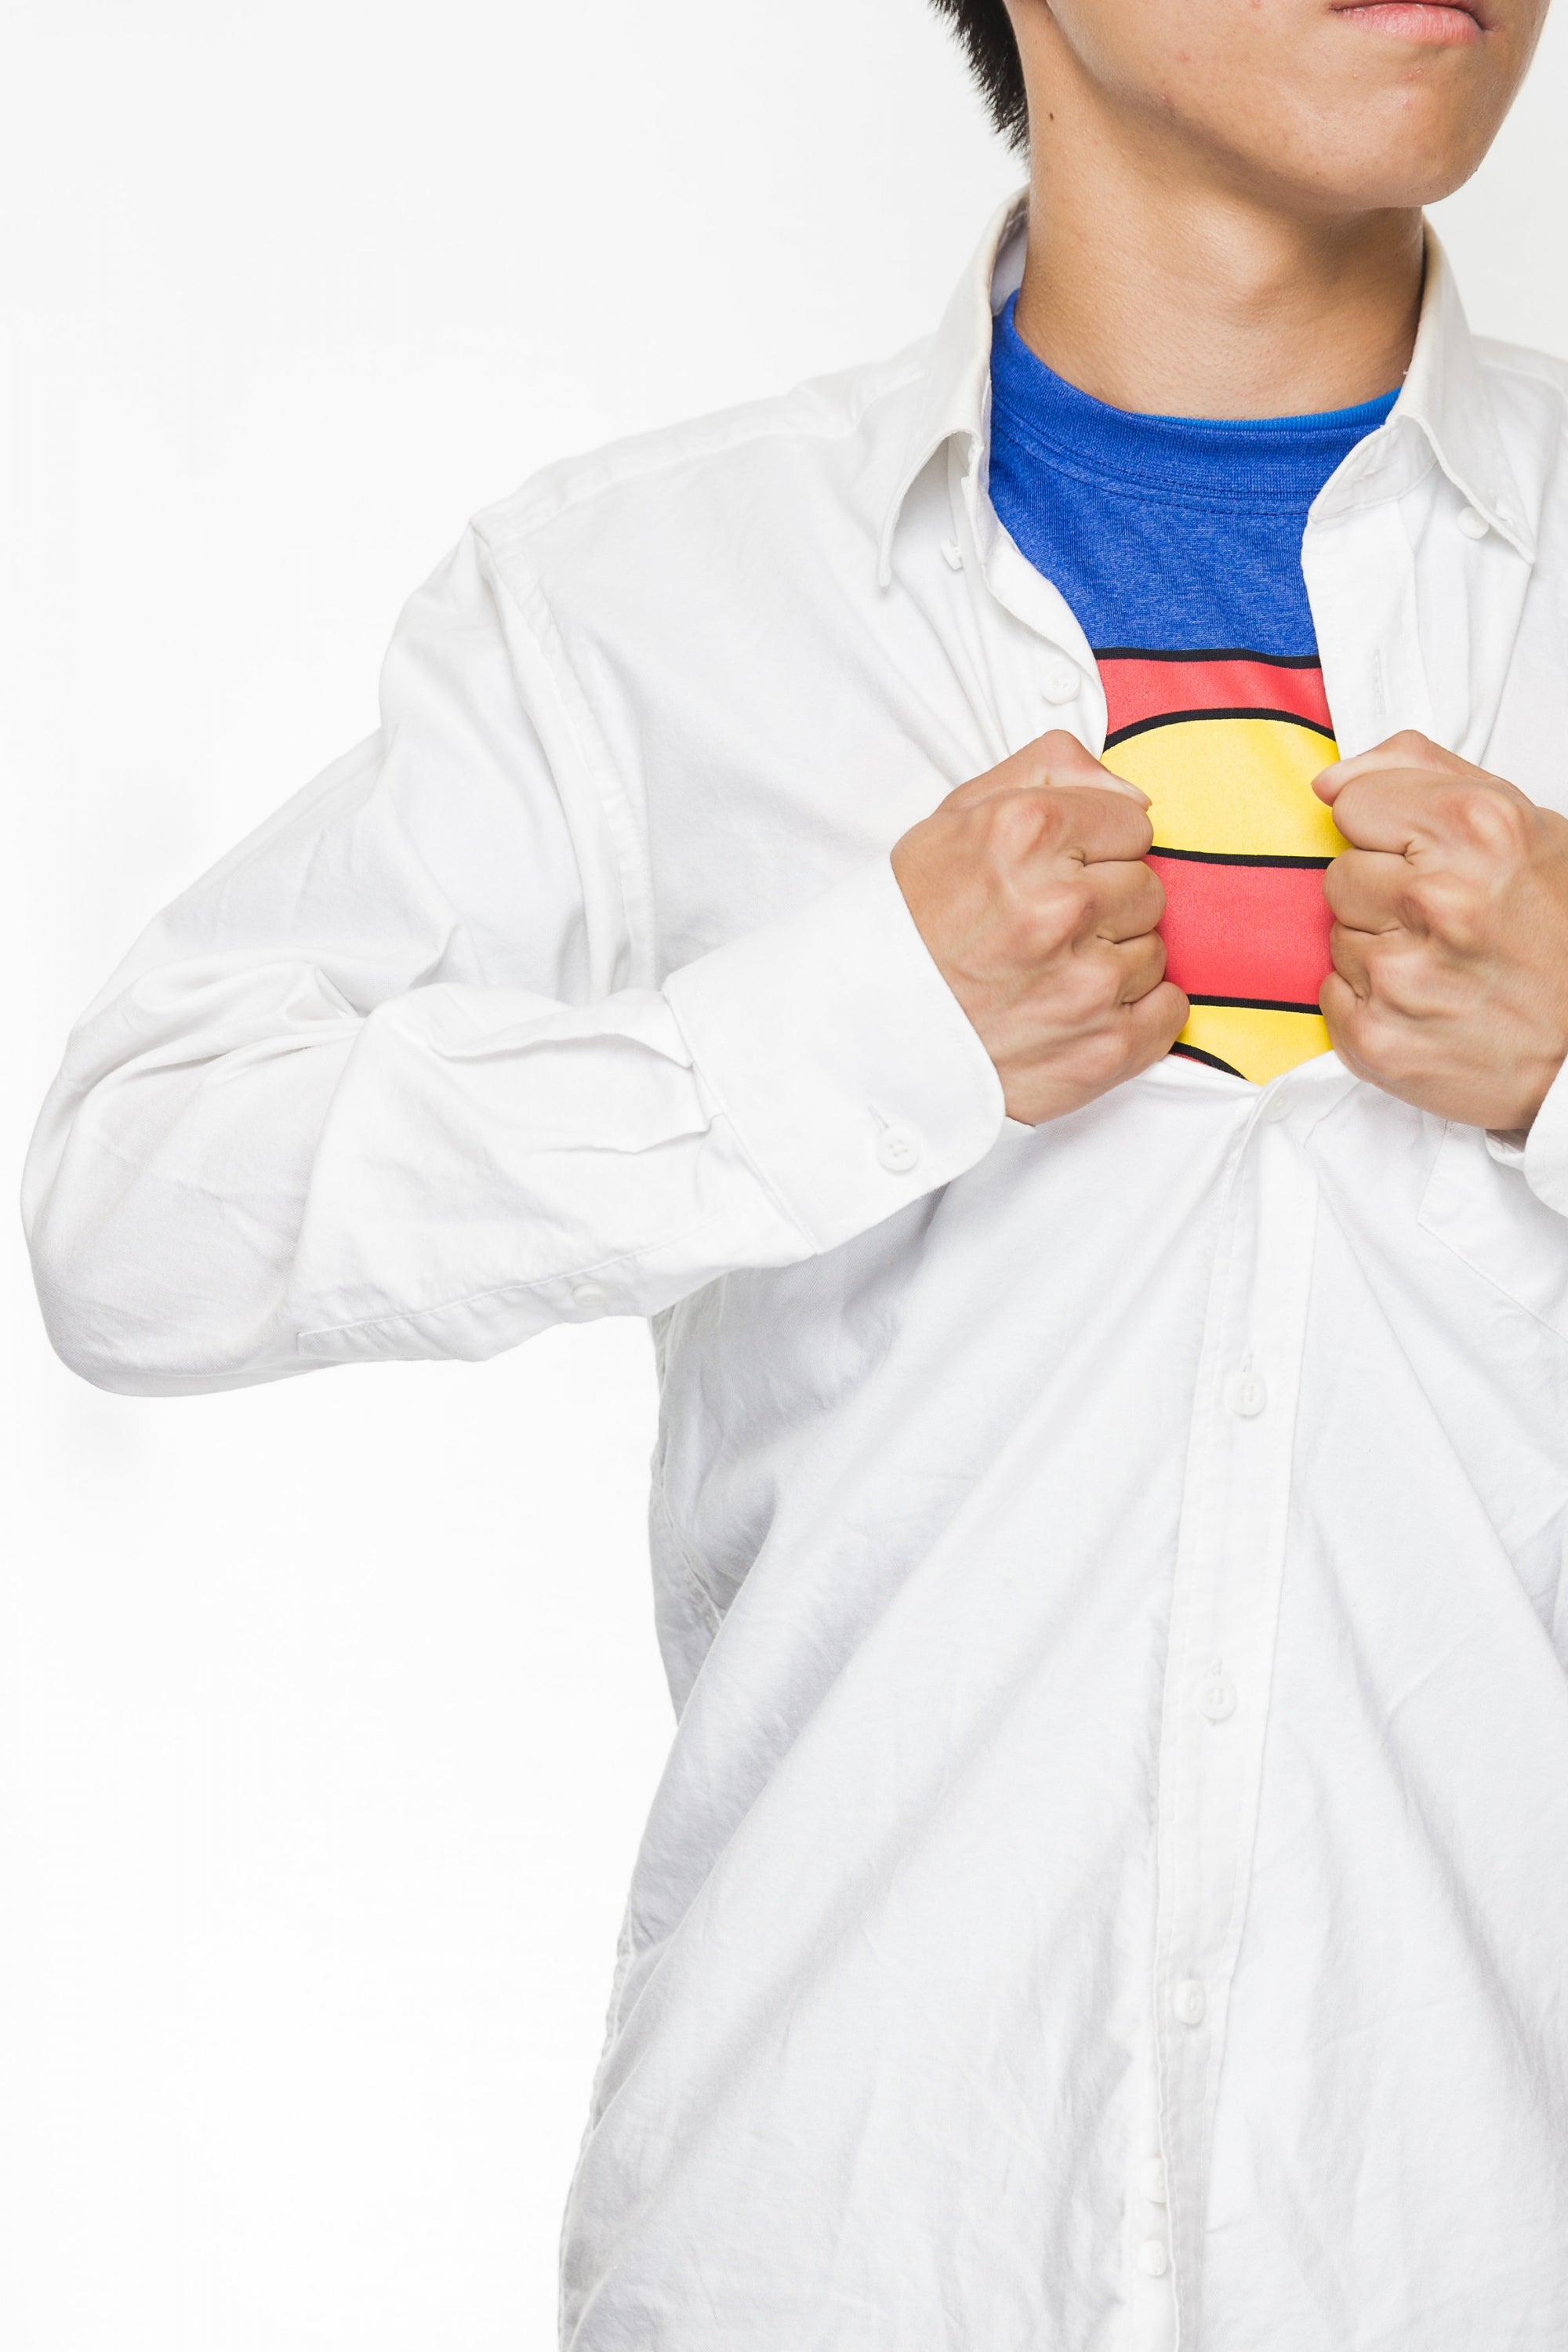 superhero revealing costume underneath a white dress shirt